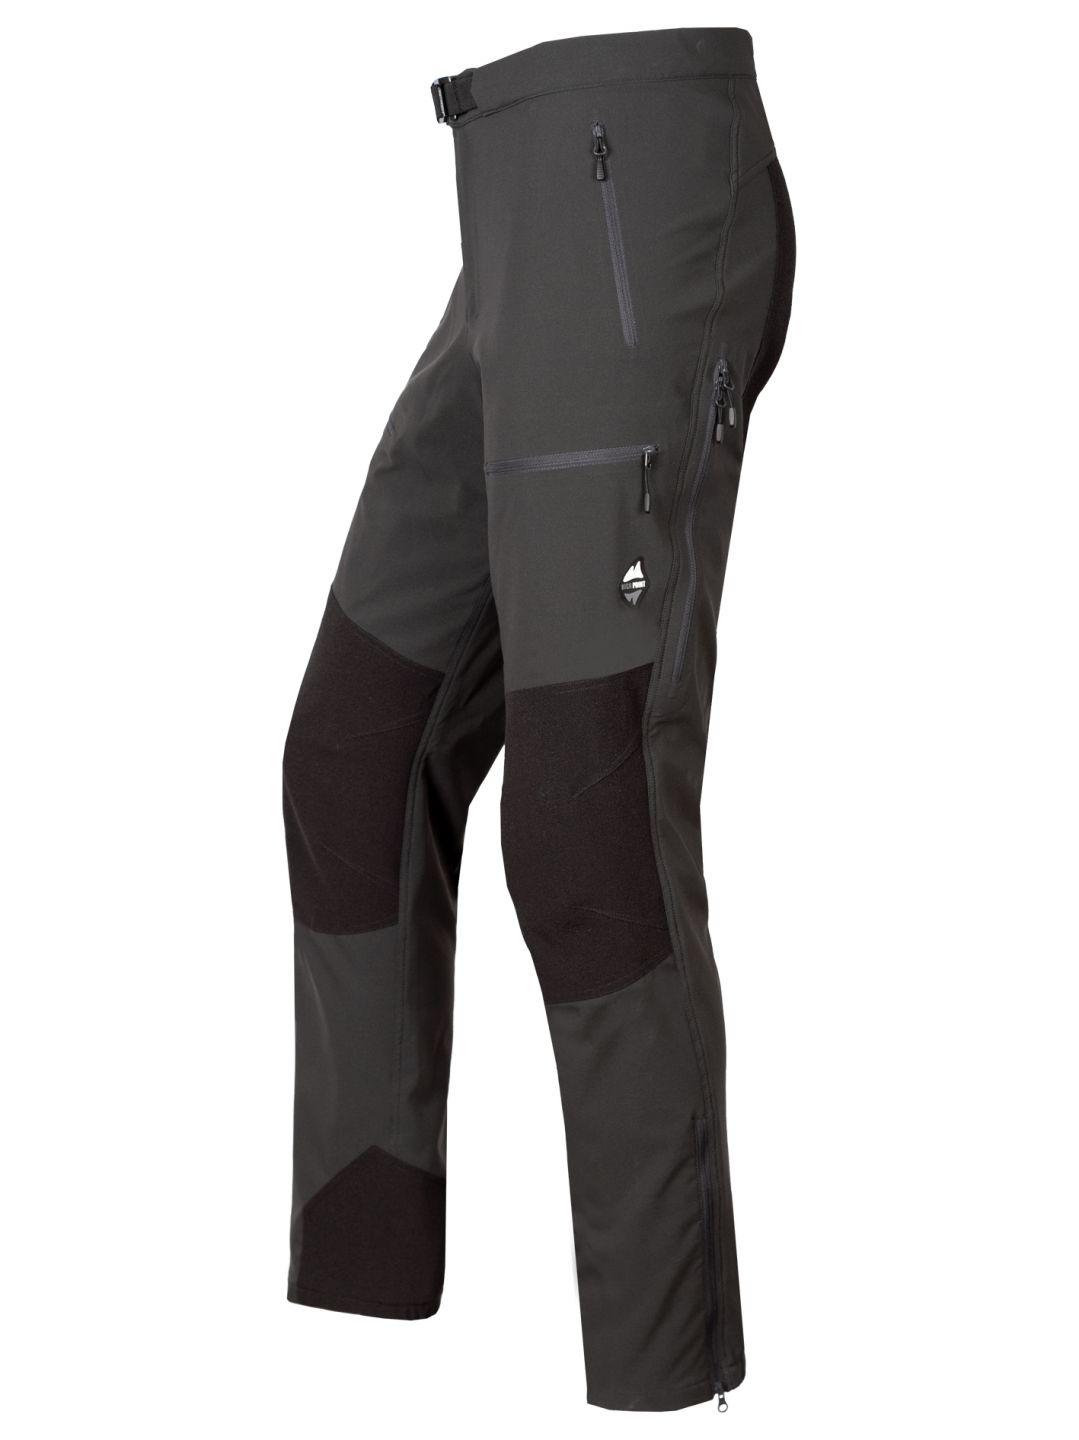 HIGH POINT Combat pants Black varianta: S